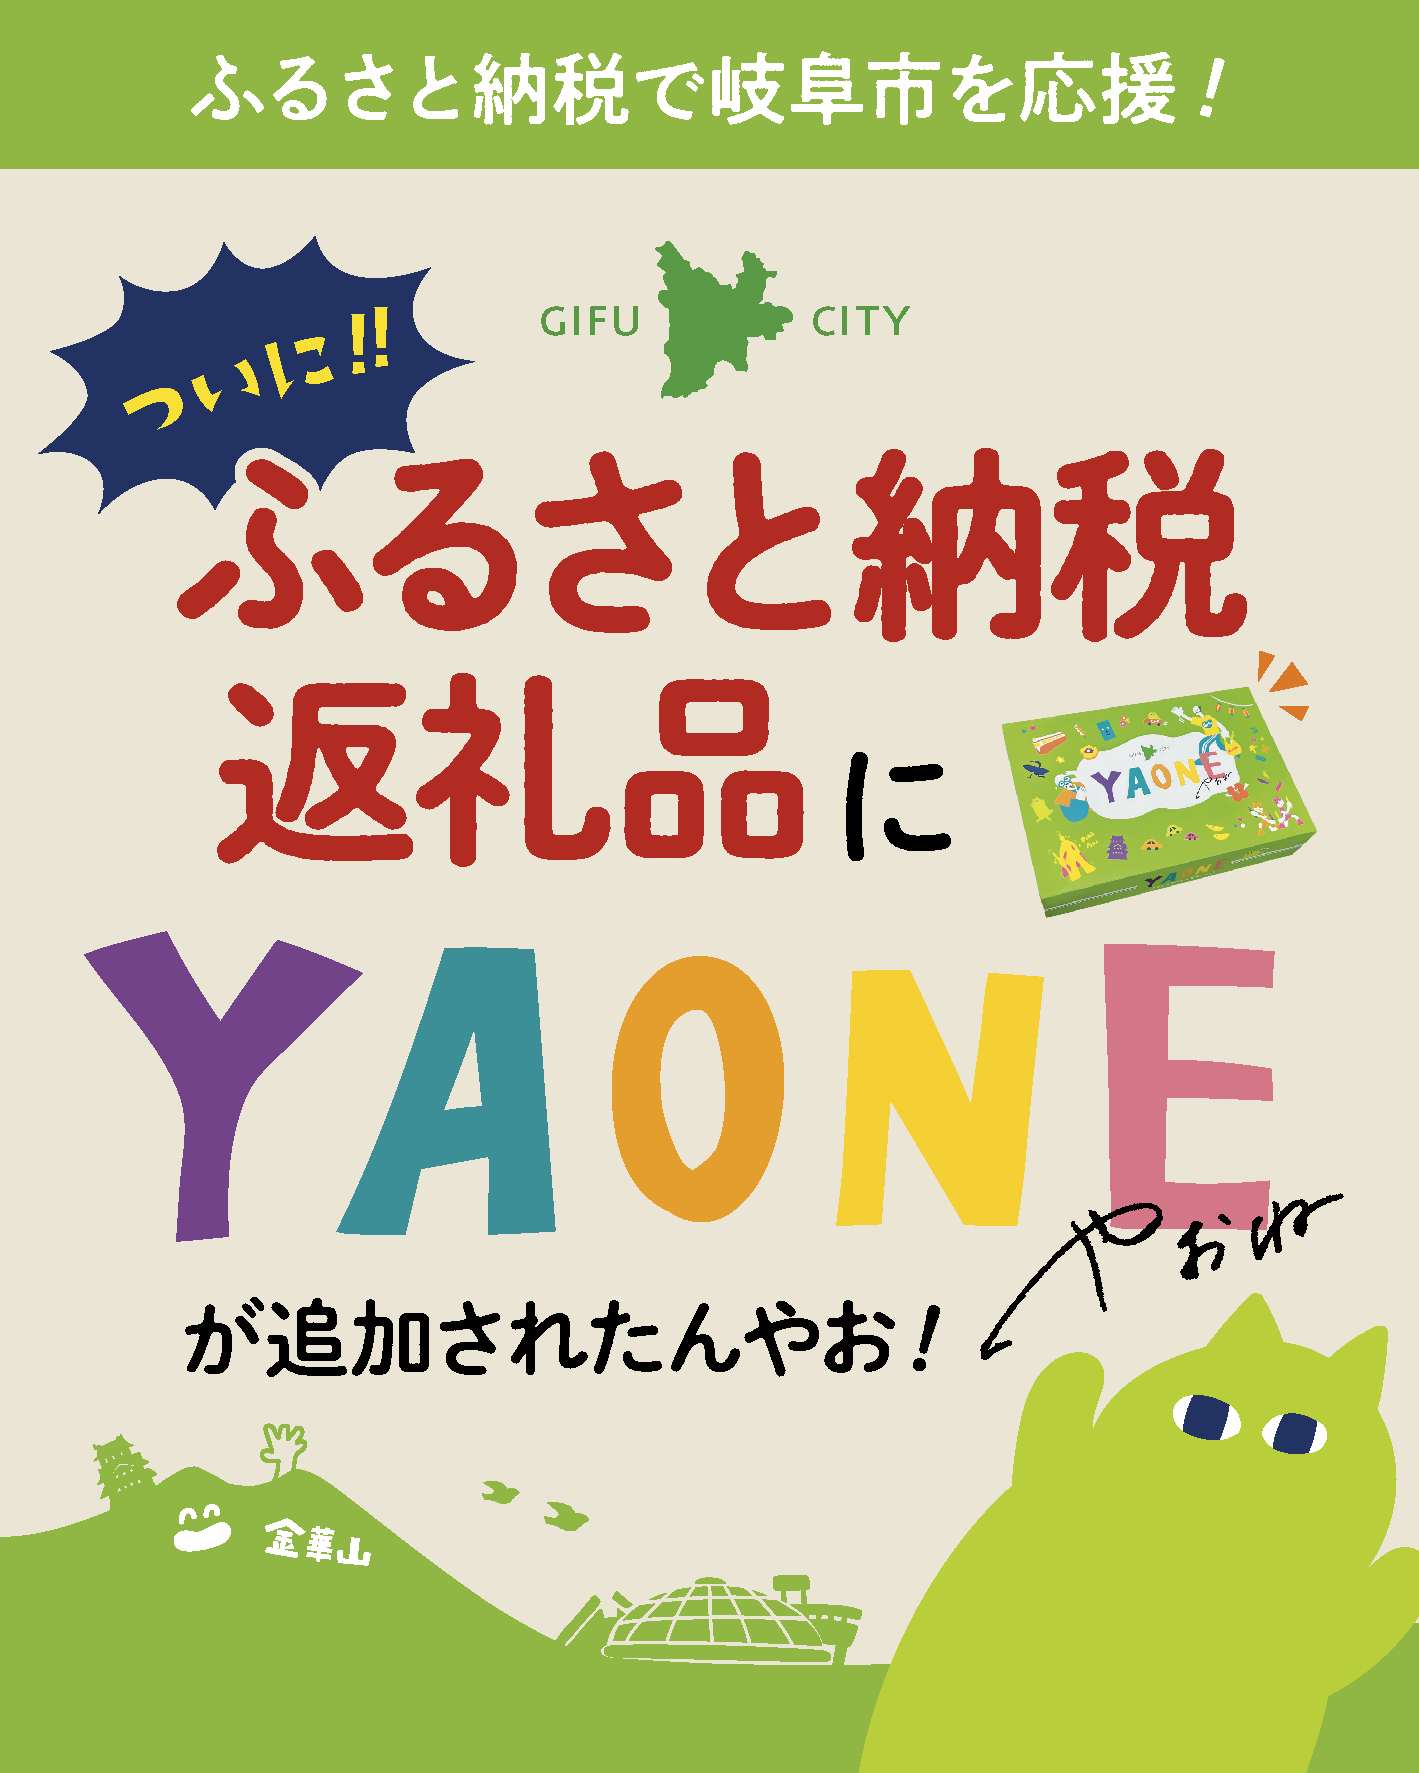 「YAONE」が岐阜市ふるさと納税返礼品に